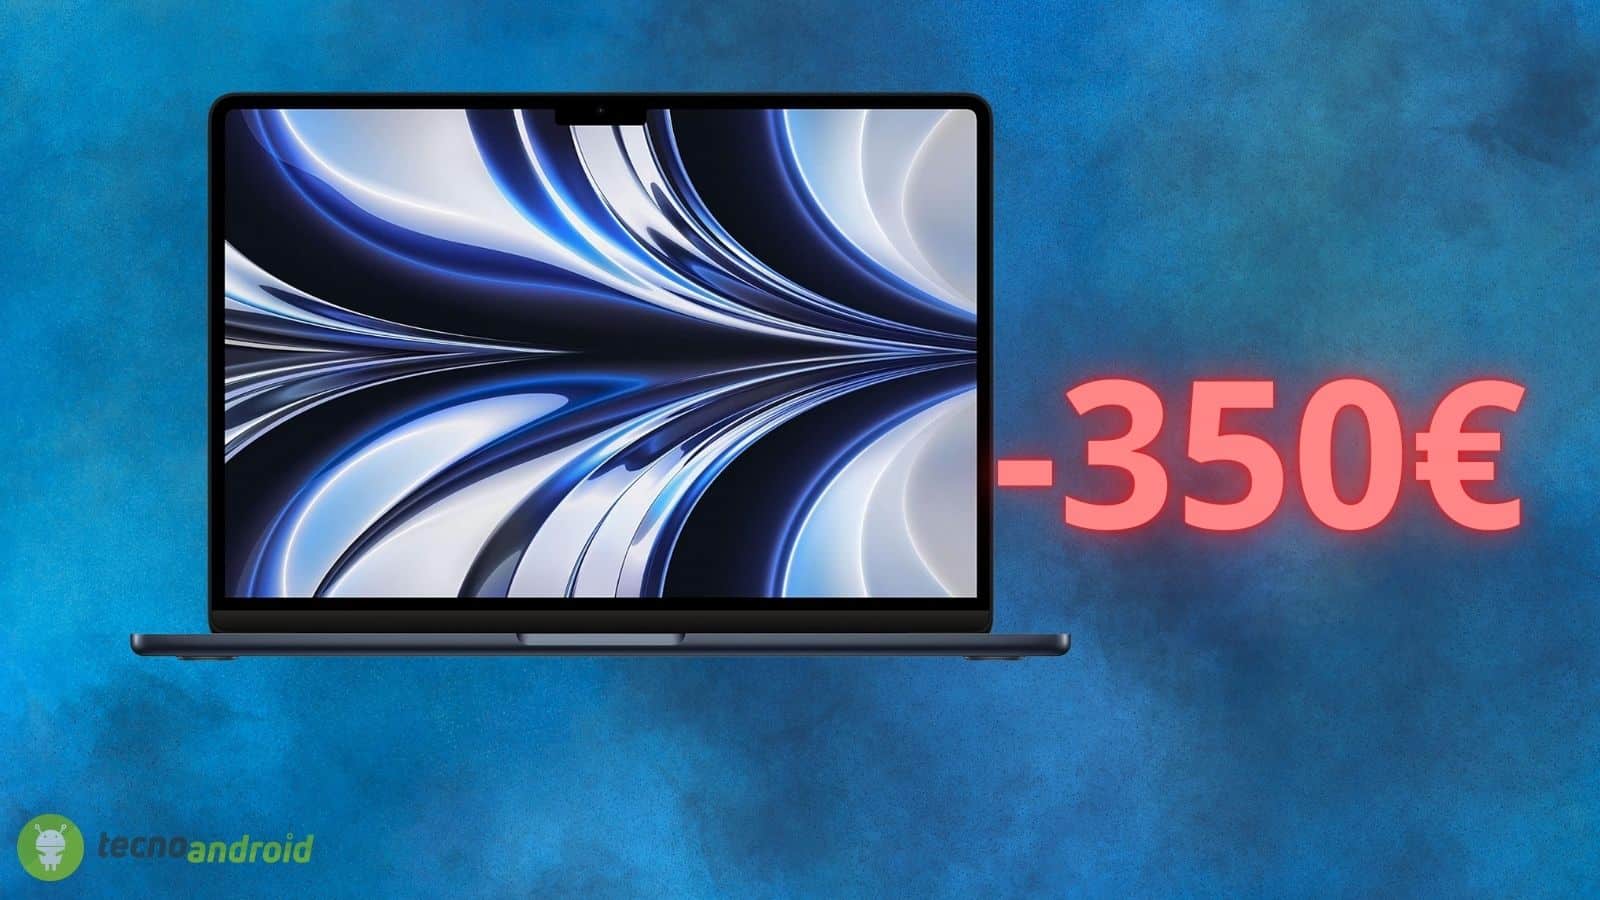 Apple MacBook Air in OFFERTA su Amazon: costa 350 euro in meno